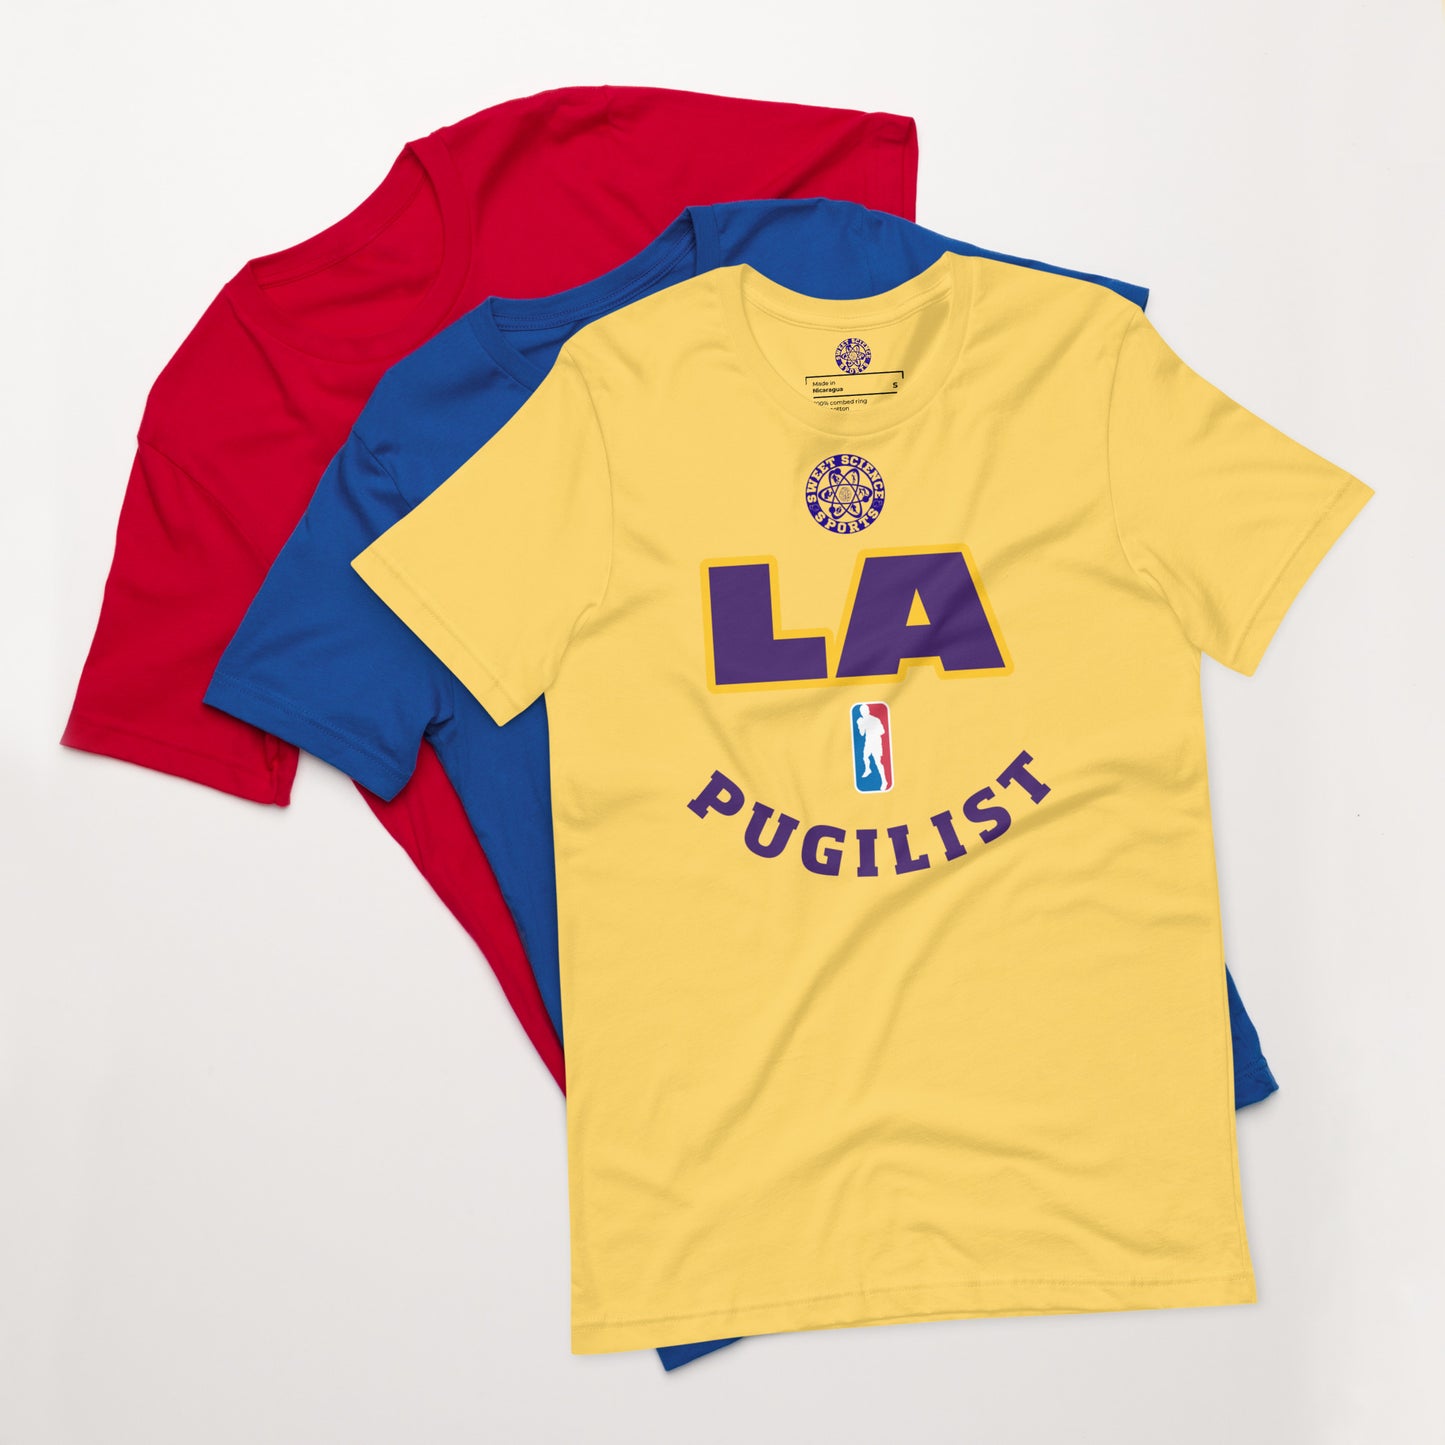 LA Pugilist  t-shirt